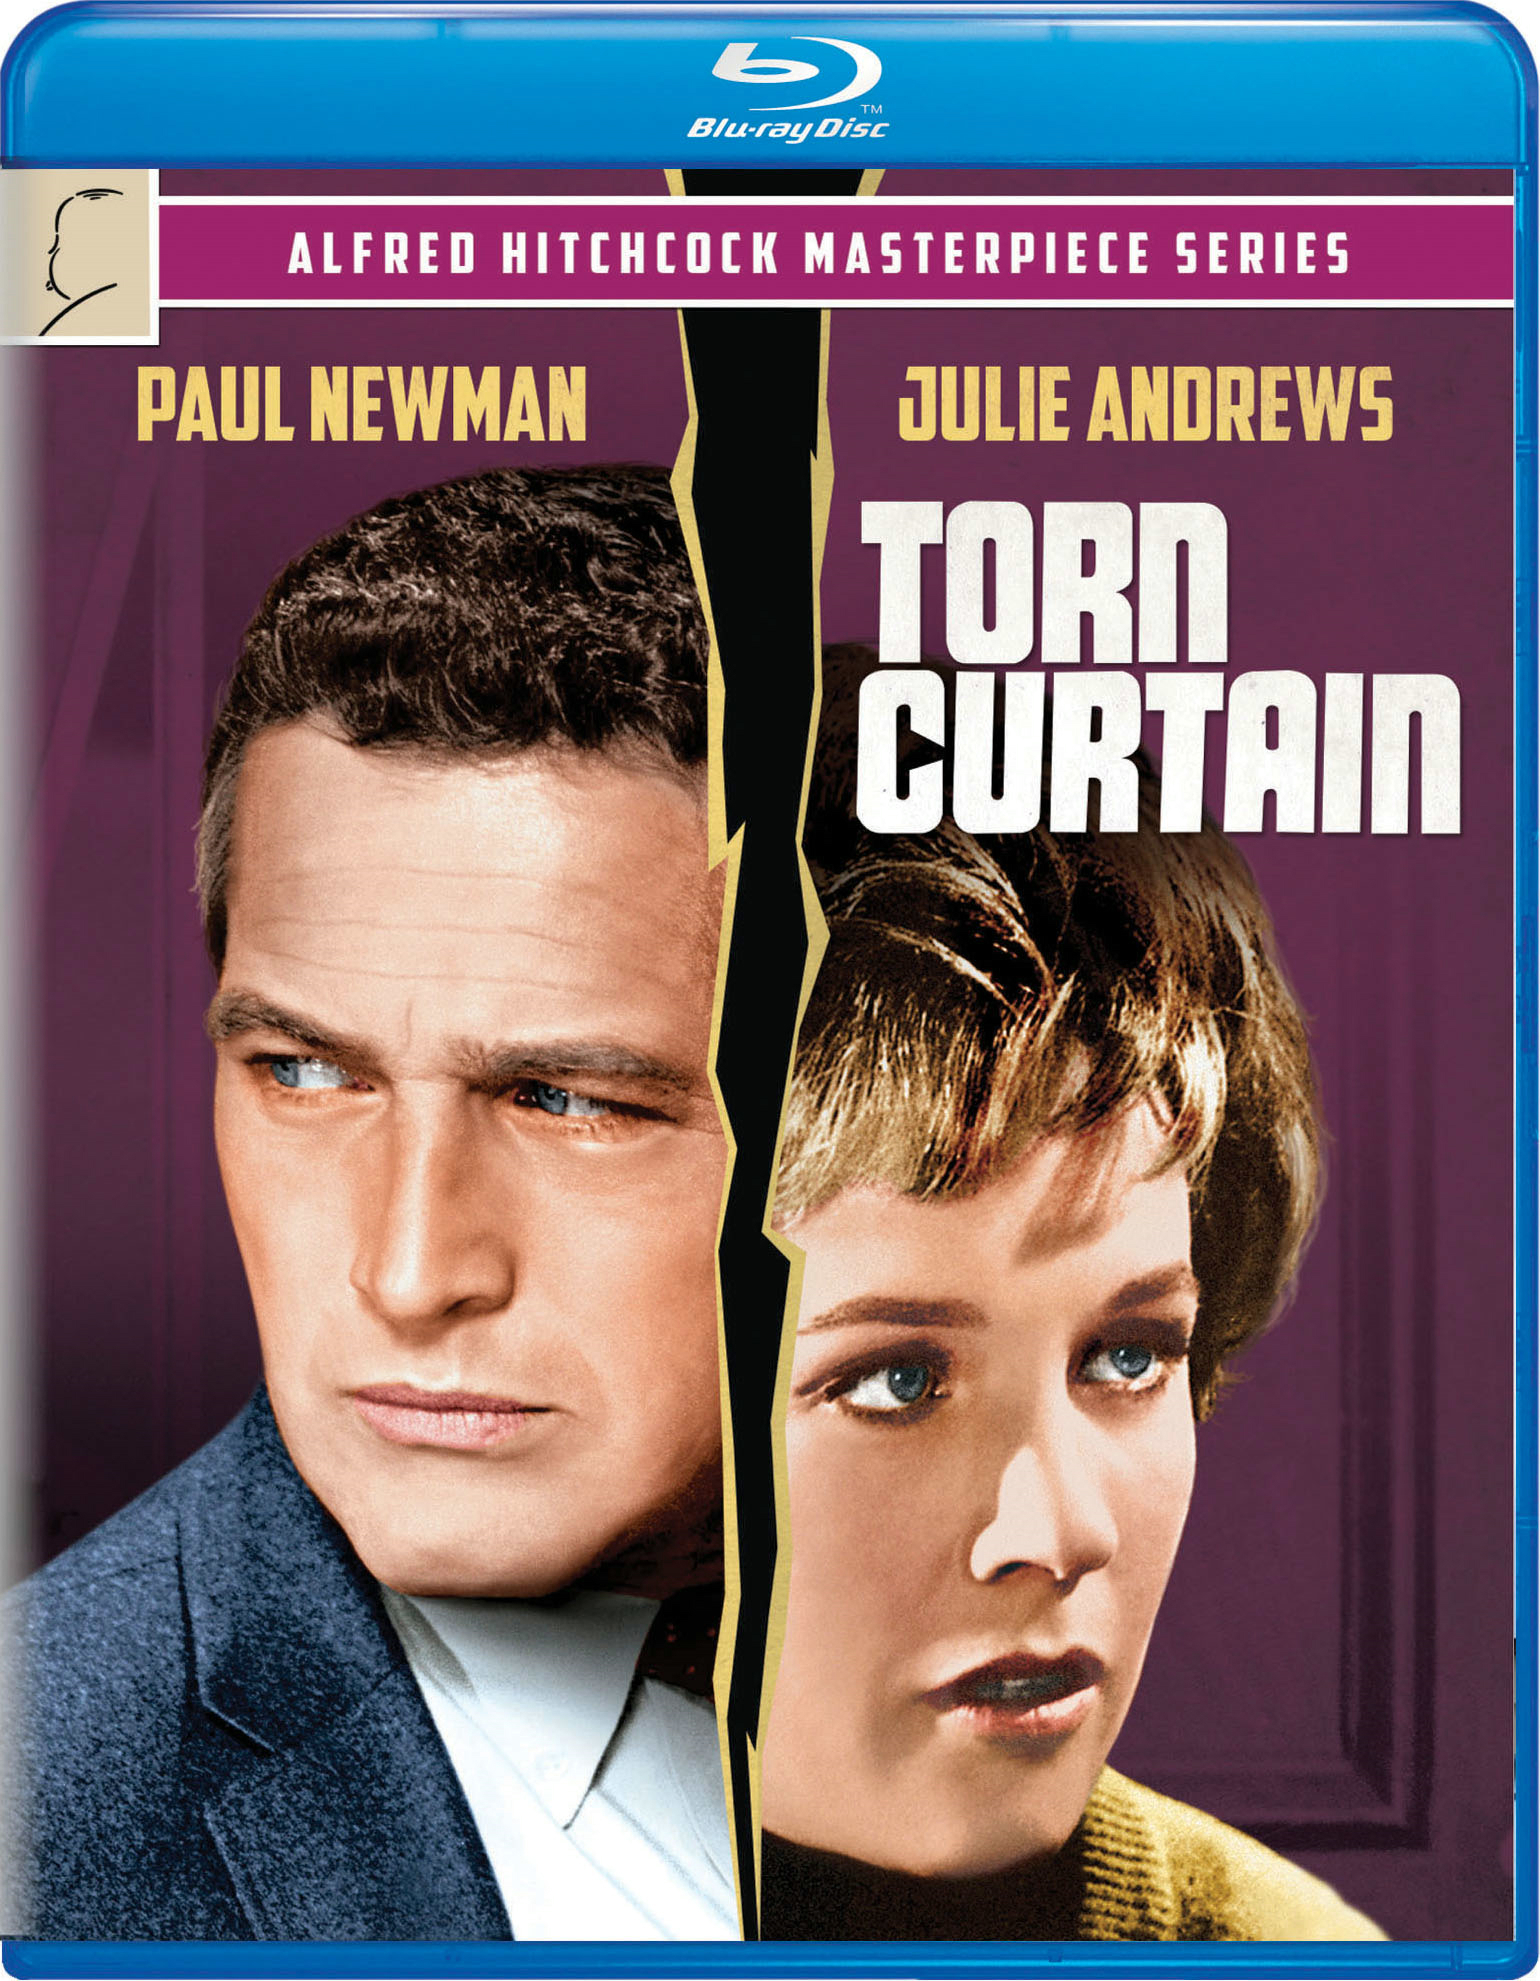 Torn Curtain - Blu-ray [ 1966 ]  - Modern Classic Movies On Blu-ray - Movies On GRUV